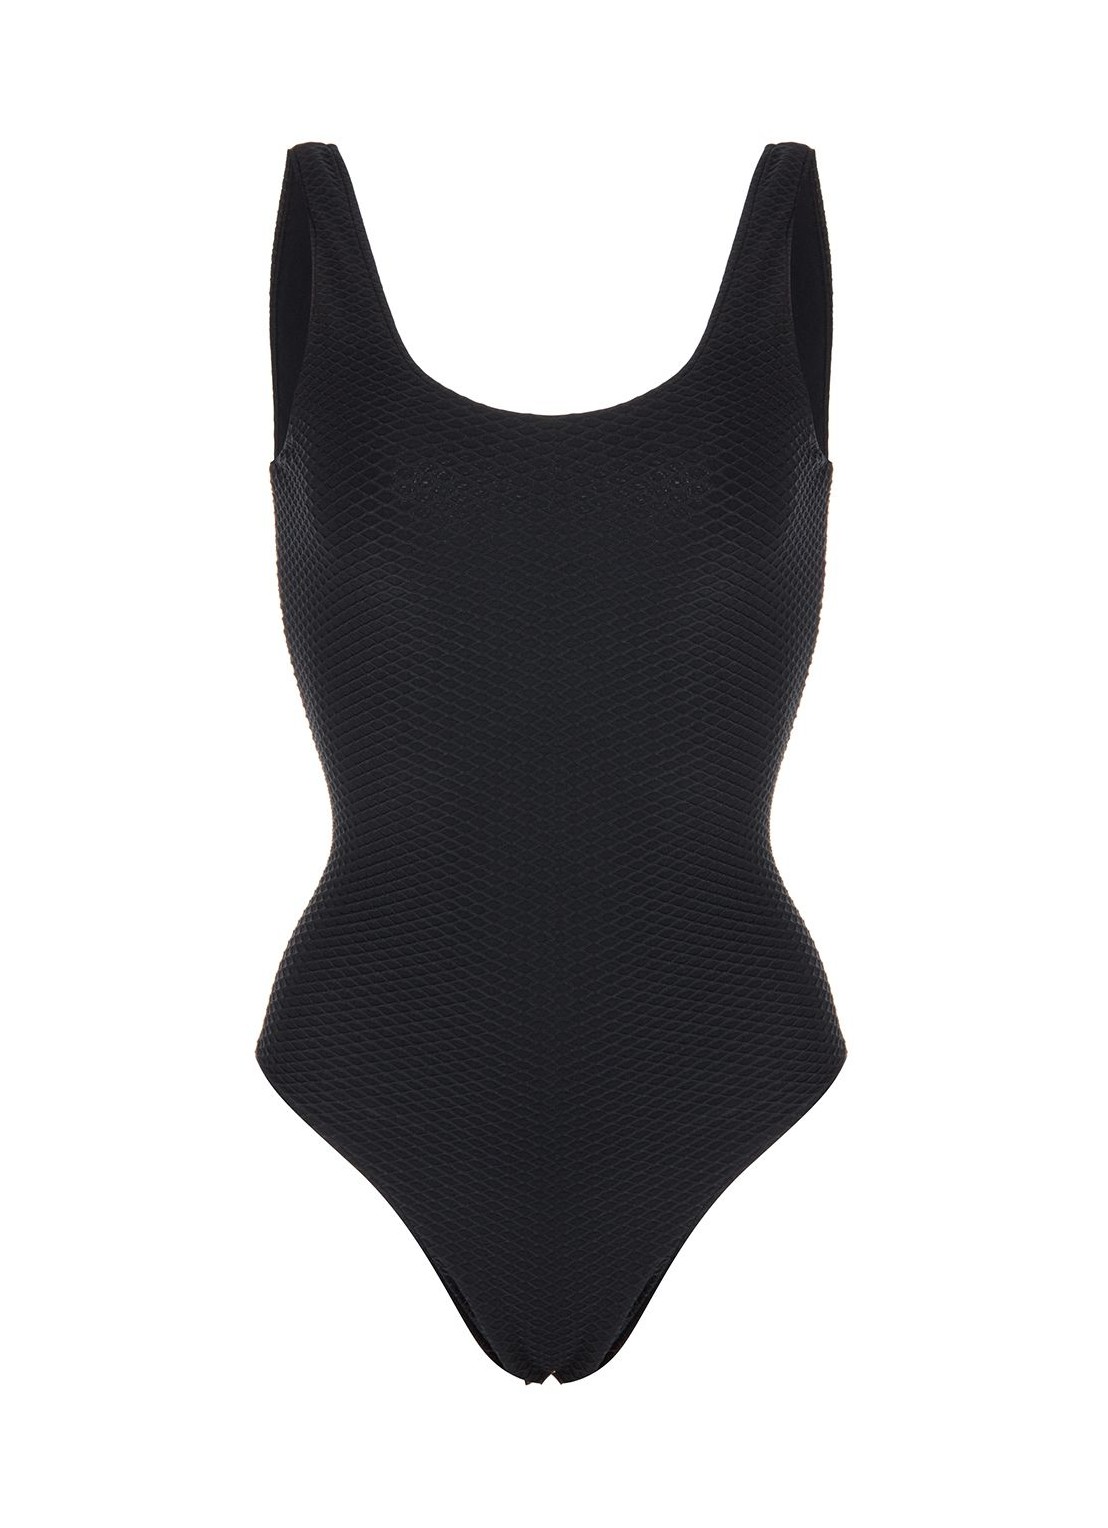 BaNador anine bing swimsuit woman jace one piece a110107007 black talla XS
 